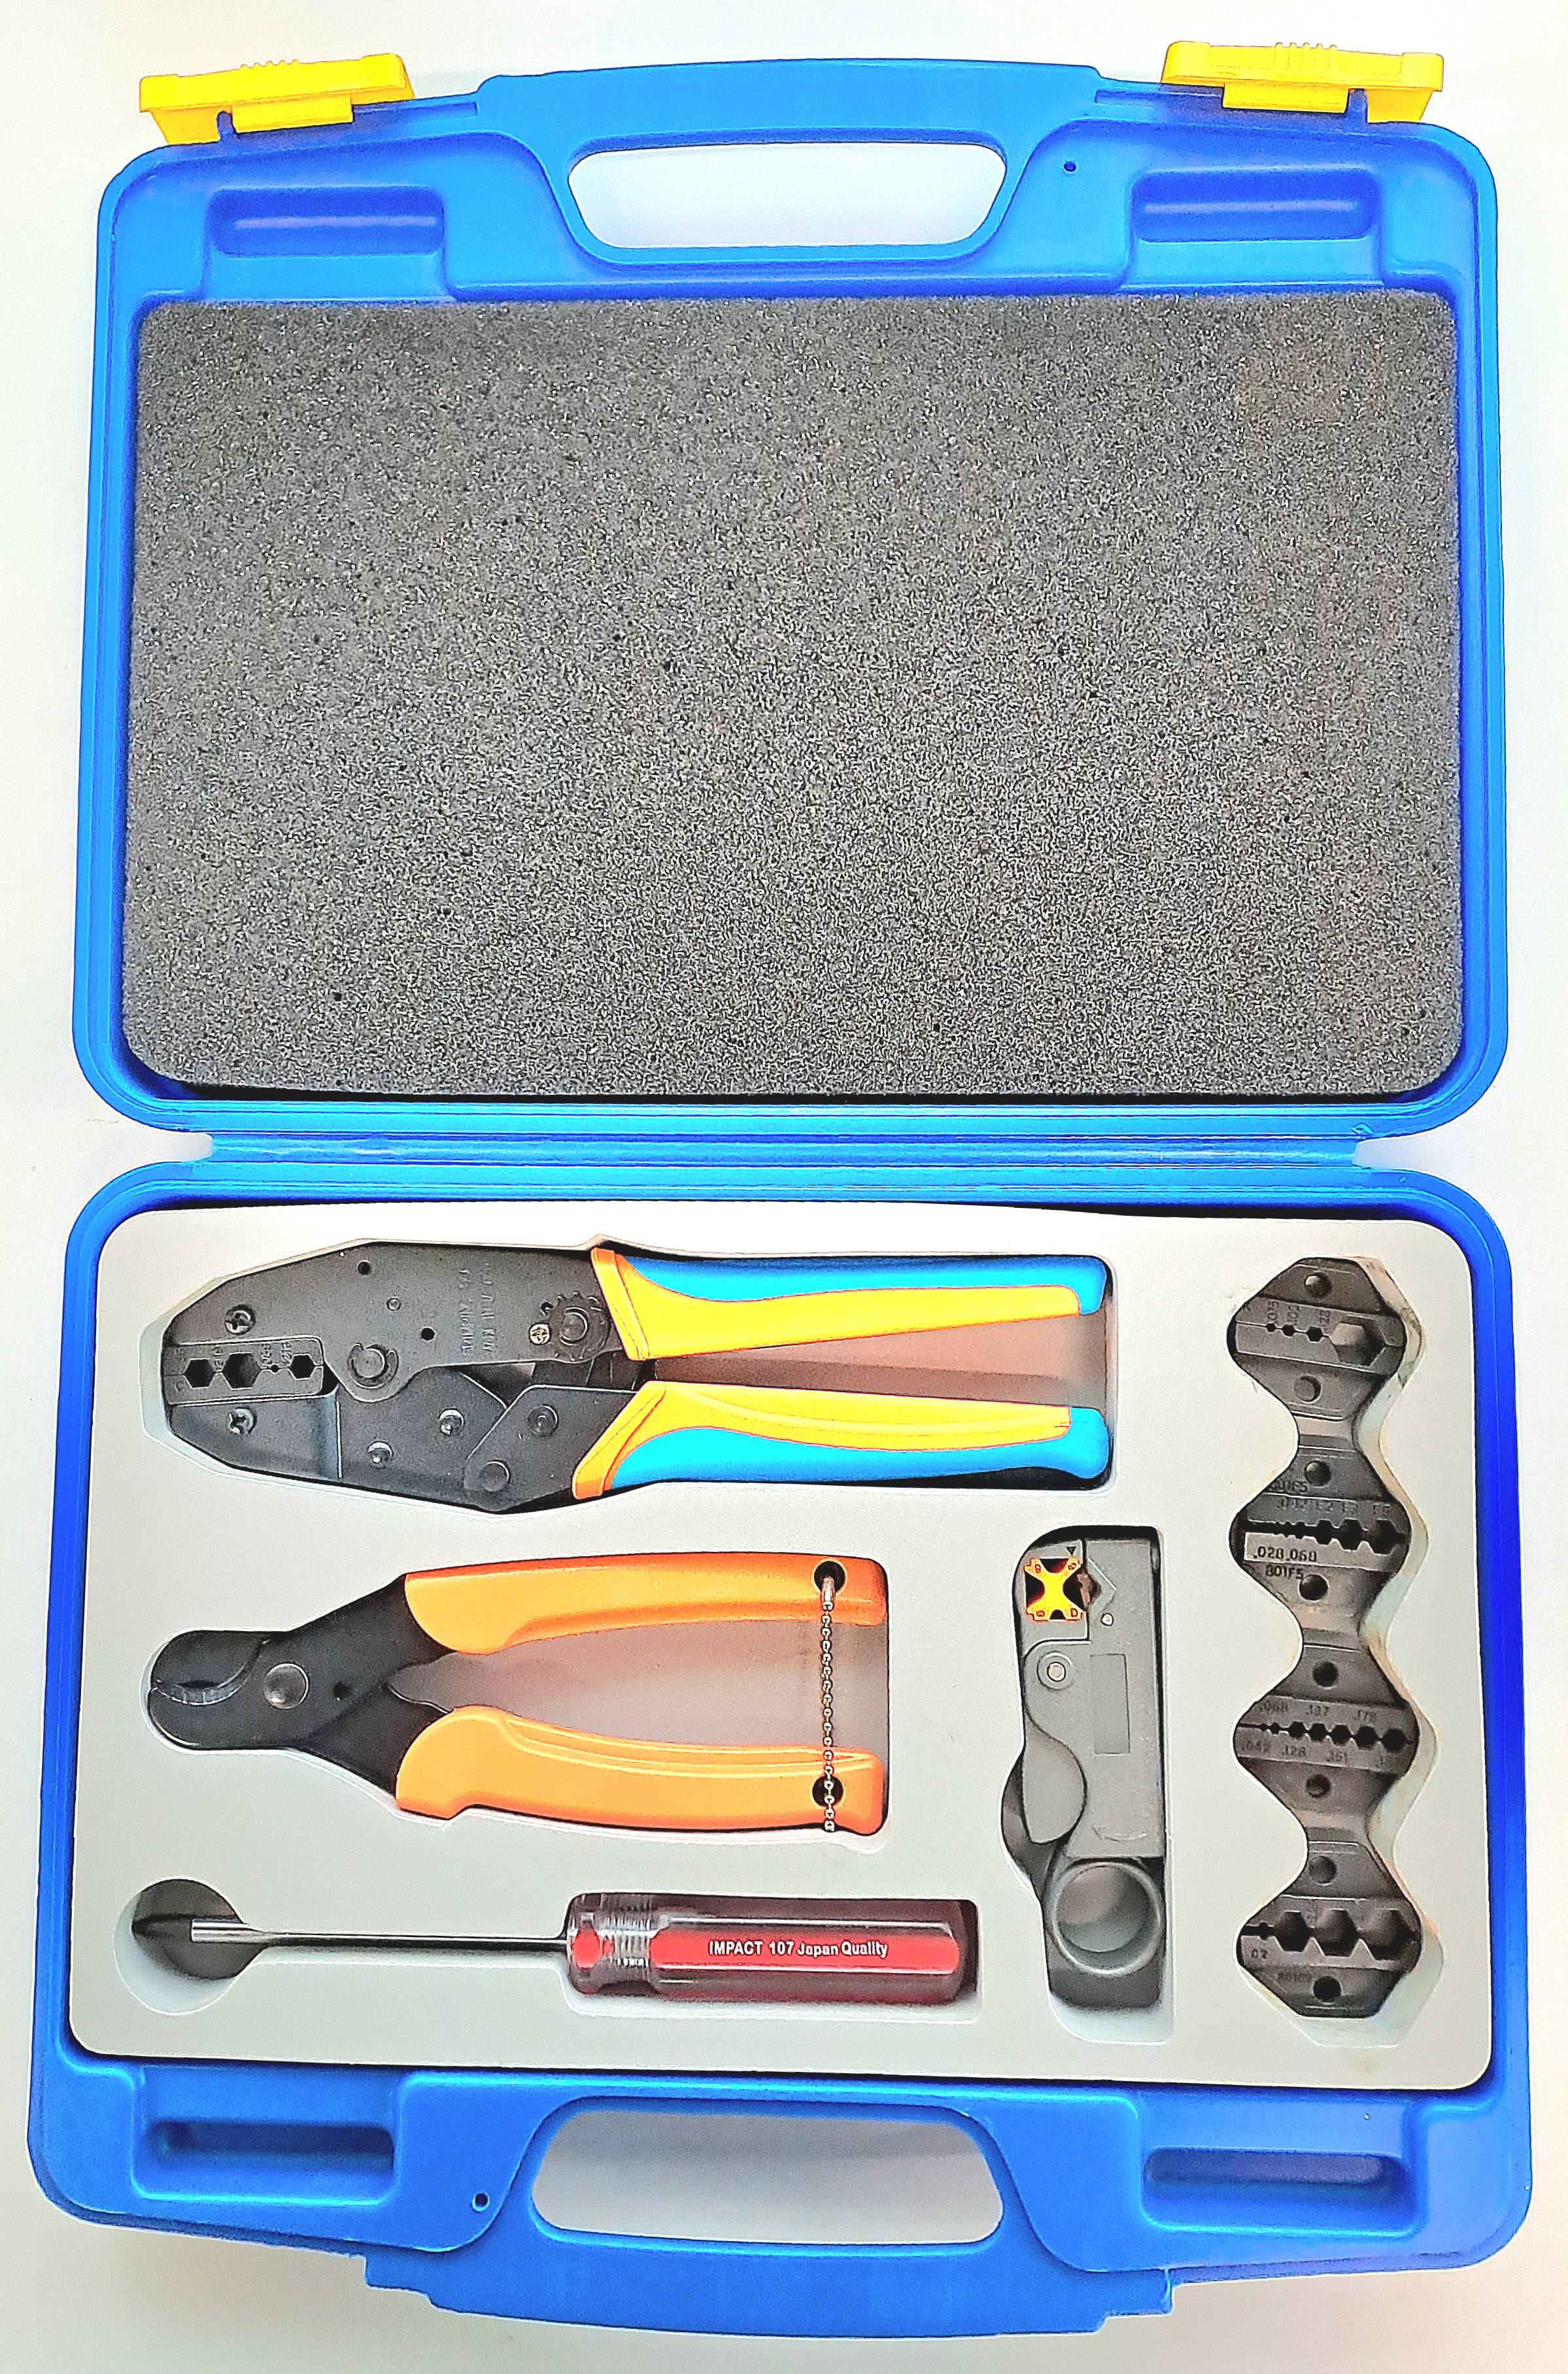 Coaxial Tool Kit HTD-830K2 (HT-830K2)